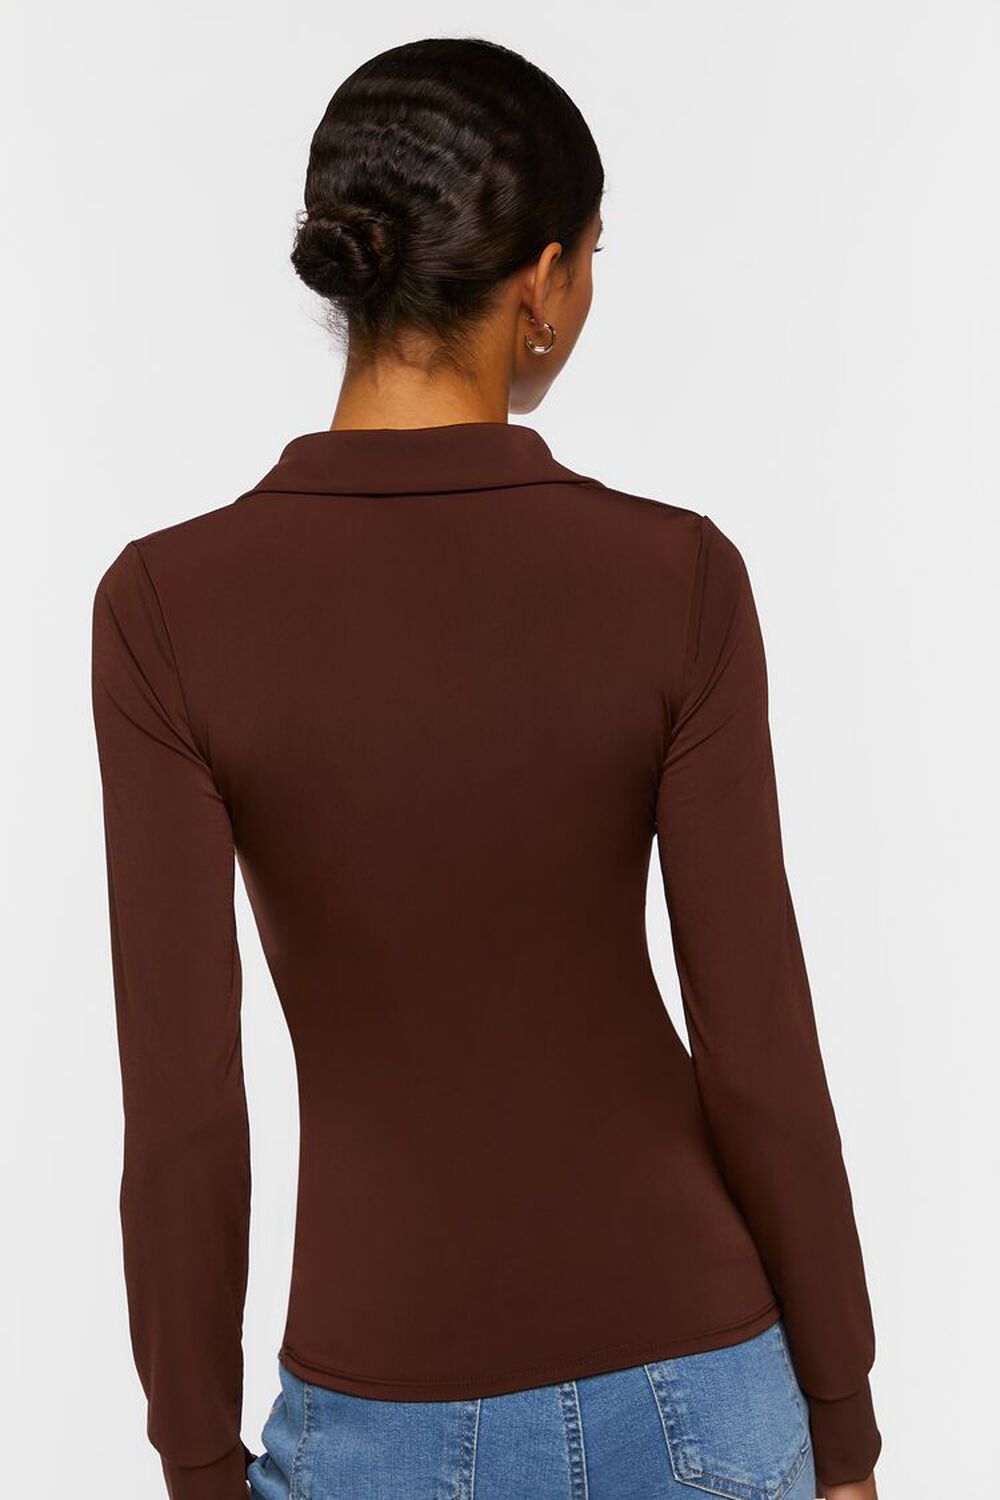 BROWN V-Neck Shirred Long-Sleeve Shirt, image 3